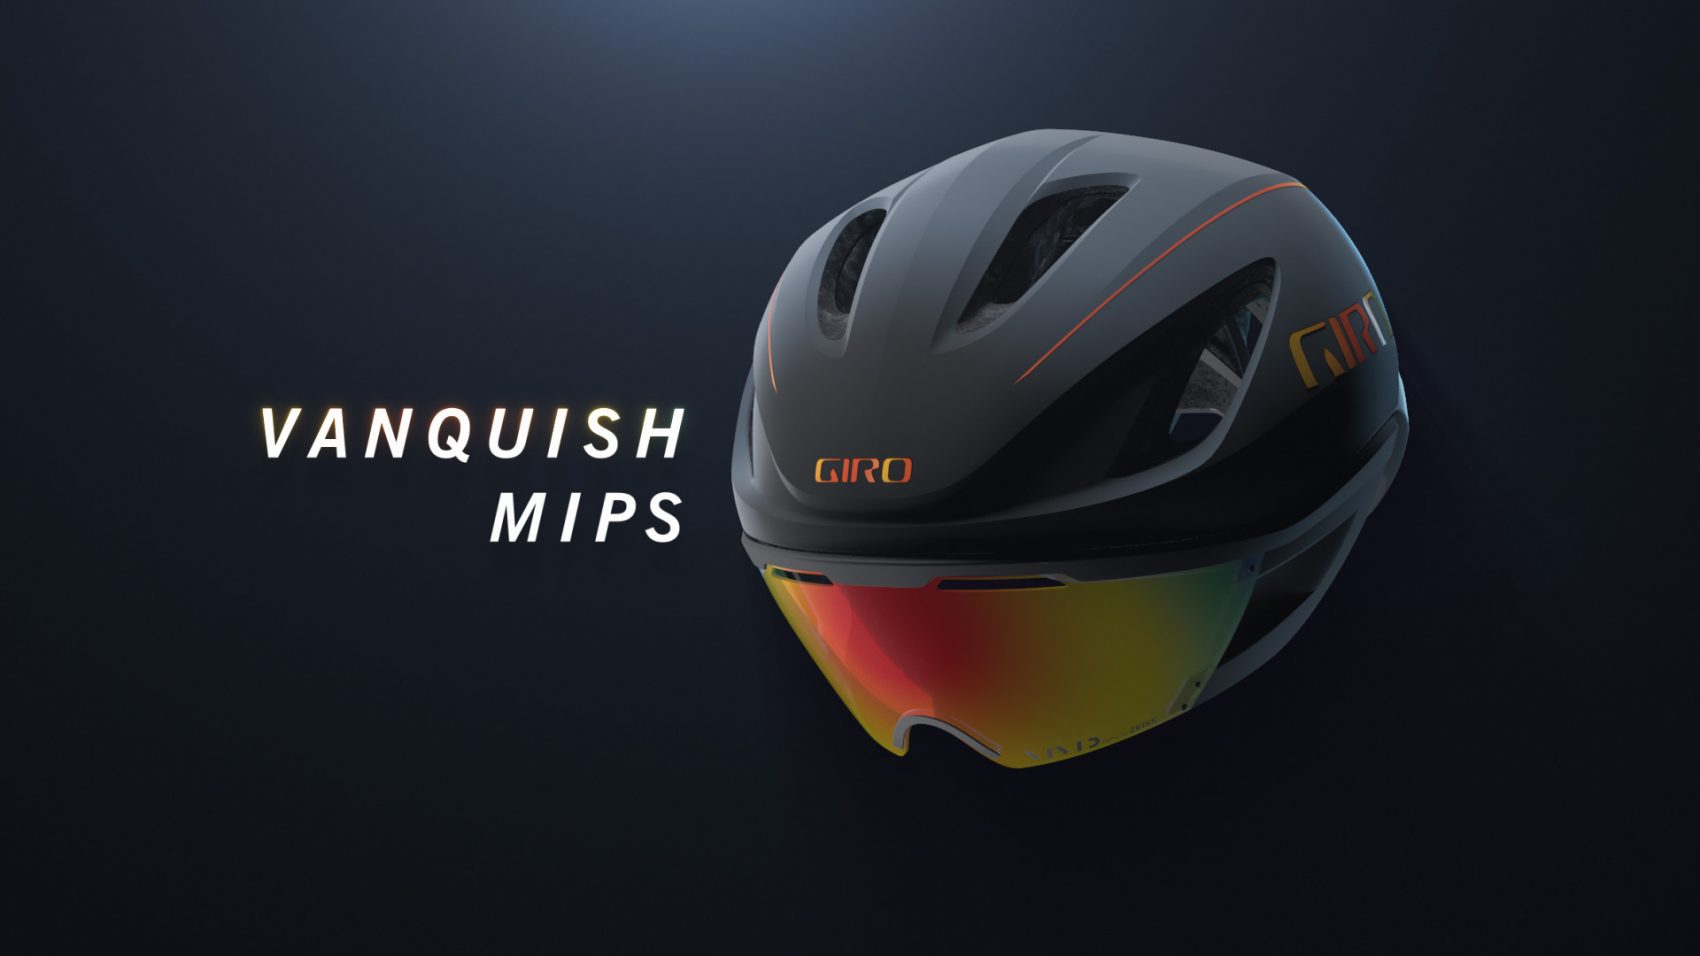 CapoVelo.com - Giro Vanquish MIPS Helmet